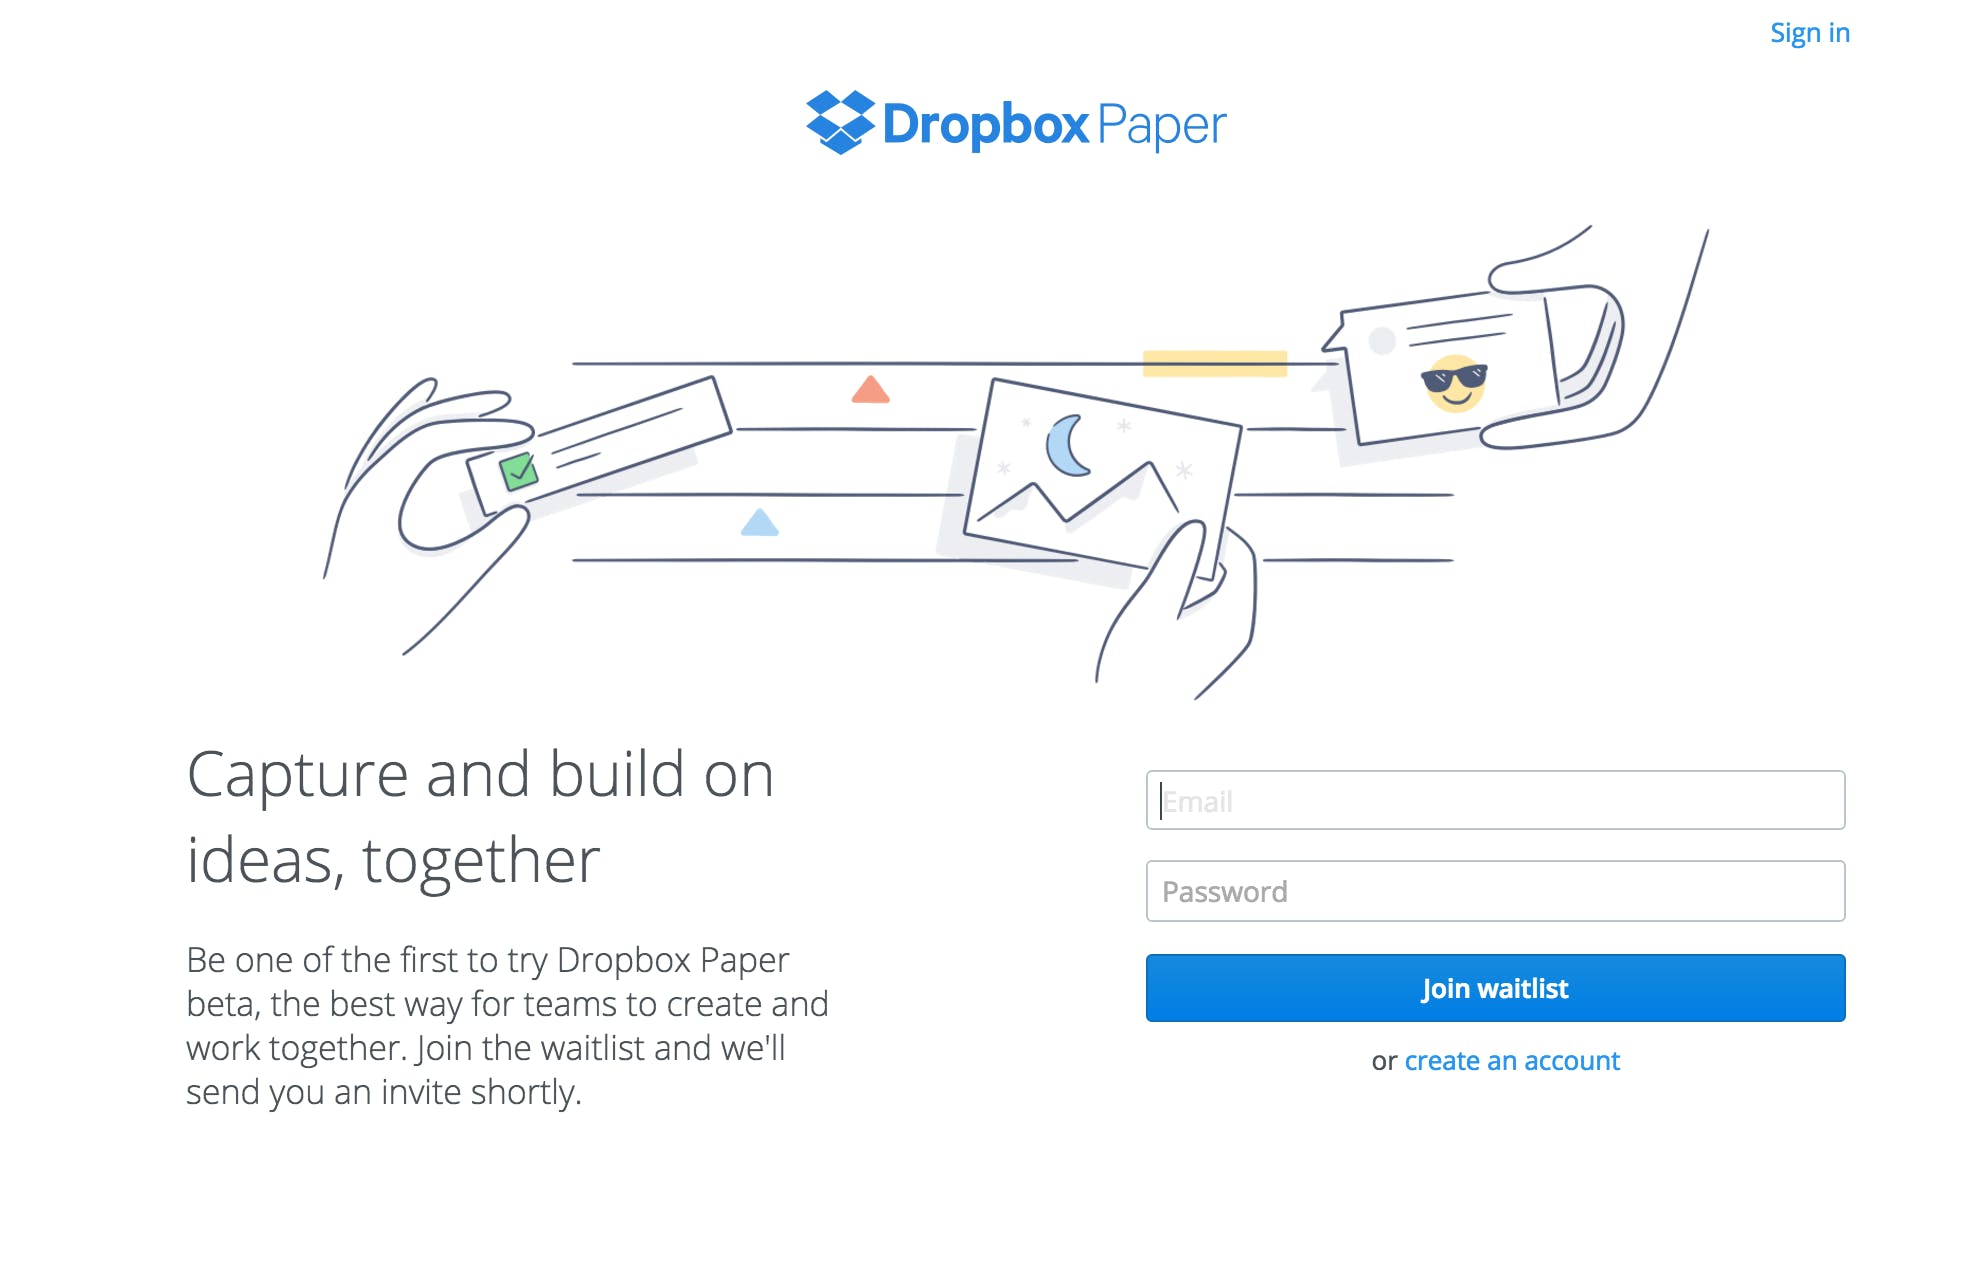 exporting dropbox paper